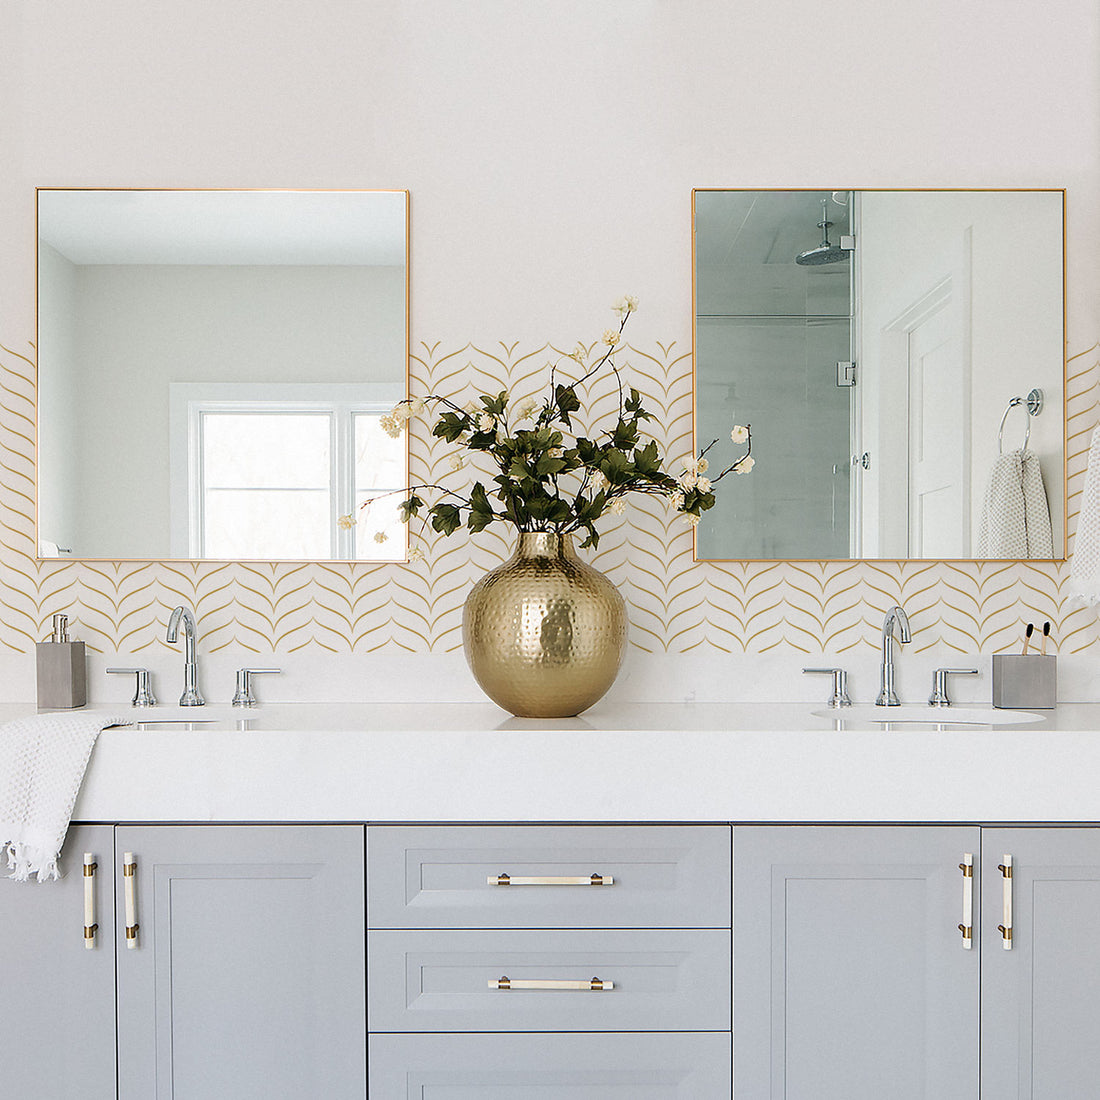 bathroom vanity backsplash in faux gold chevron pattern